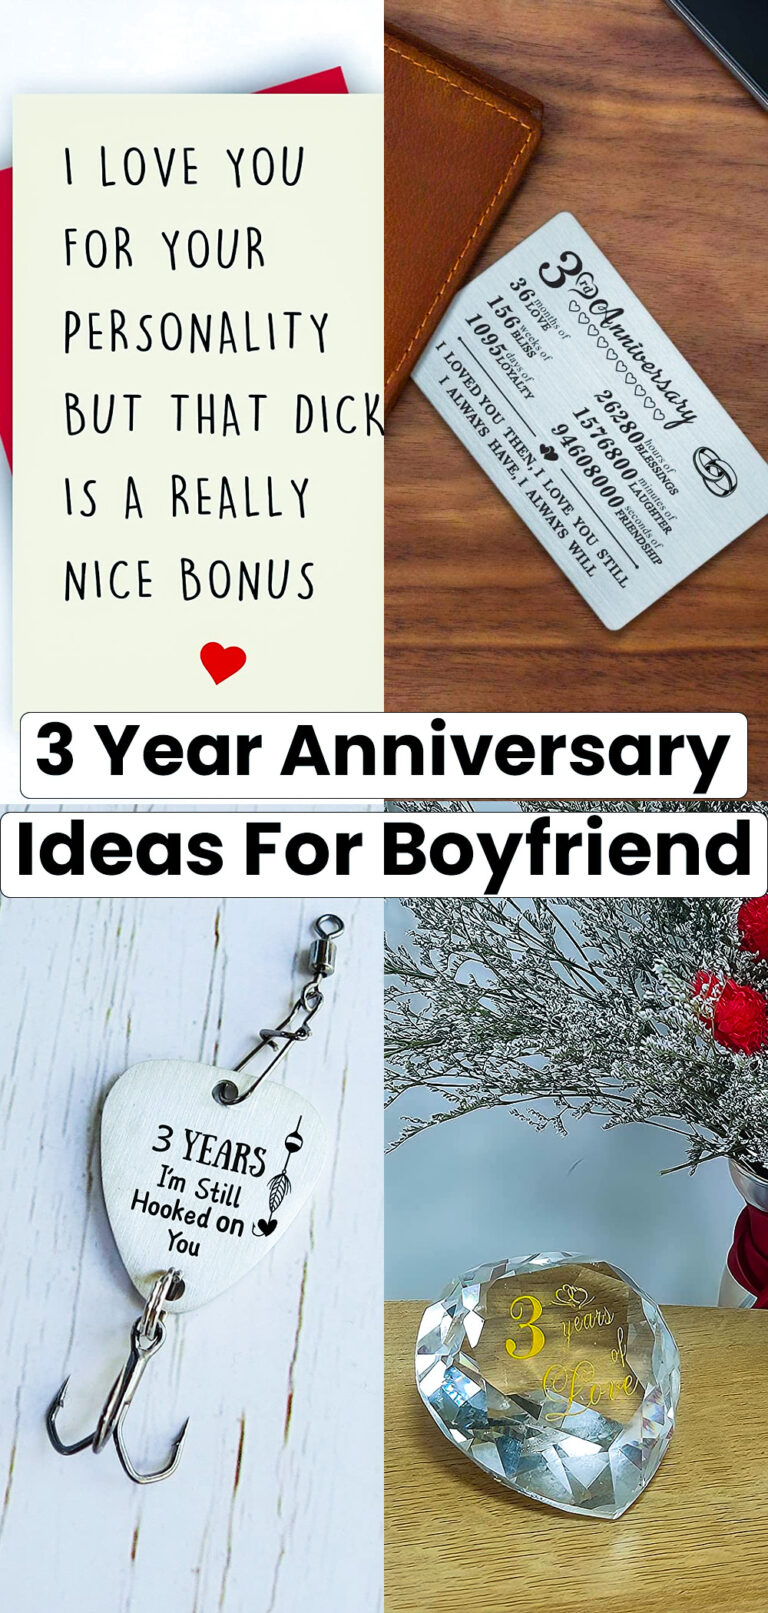 3 Year Anniversary Ideas for Boyfriend